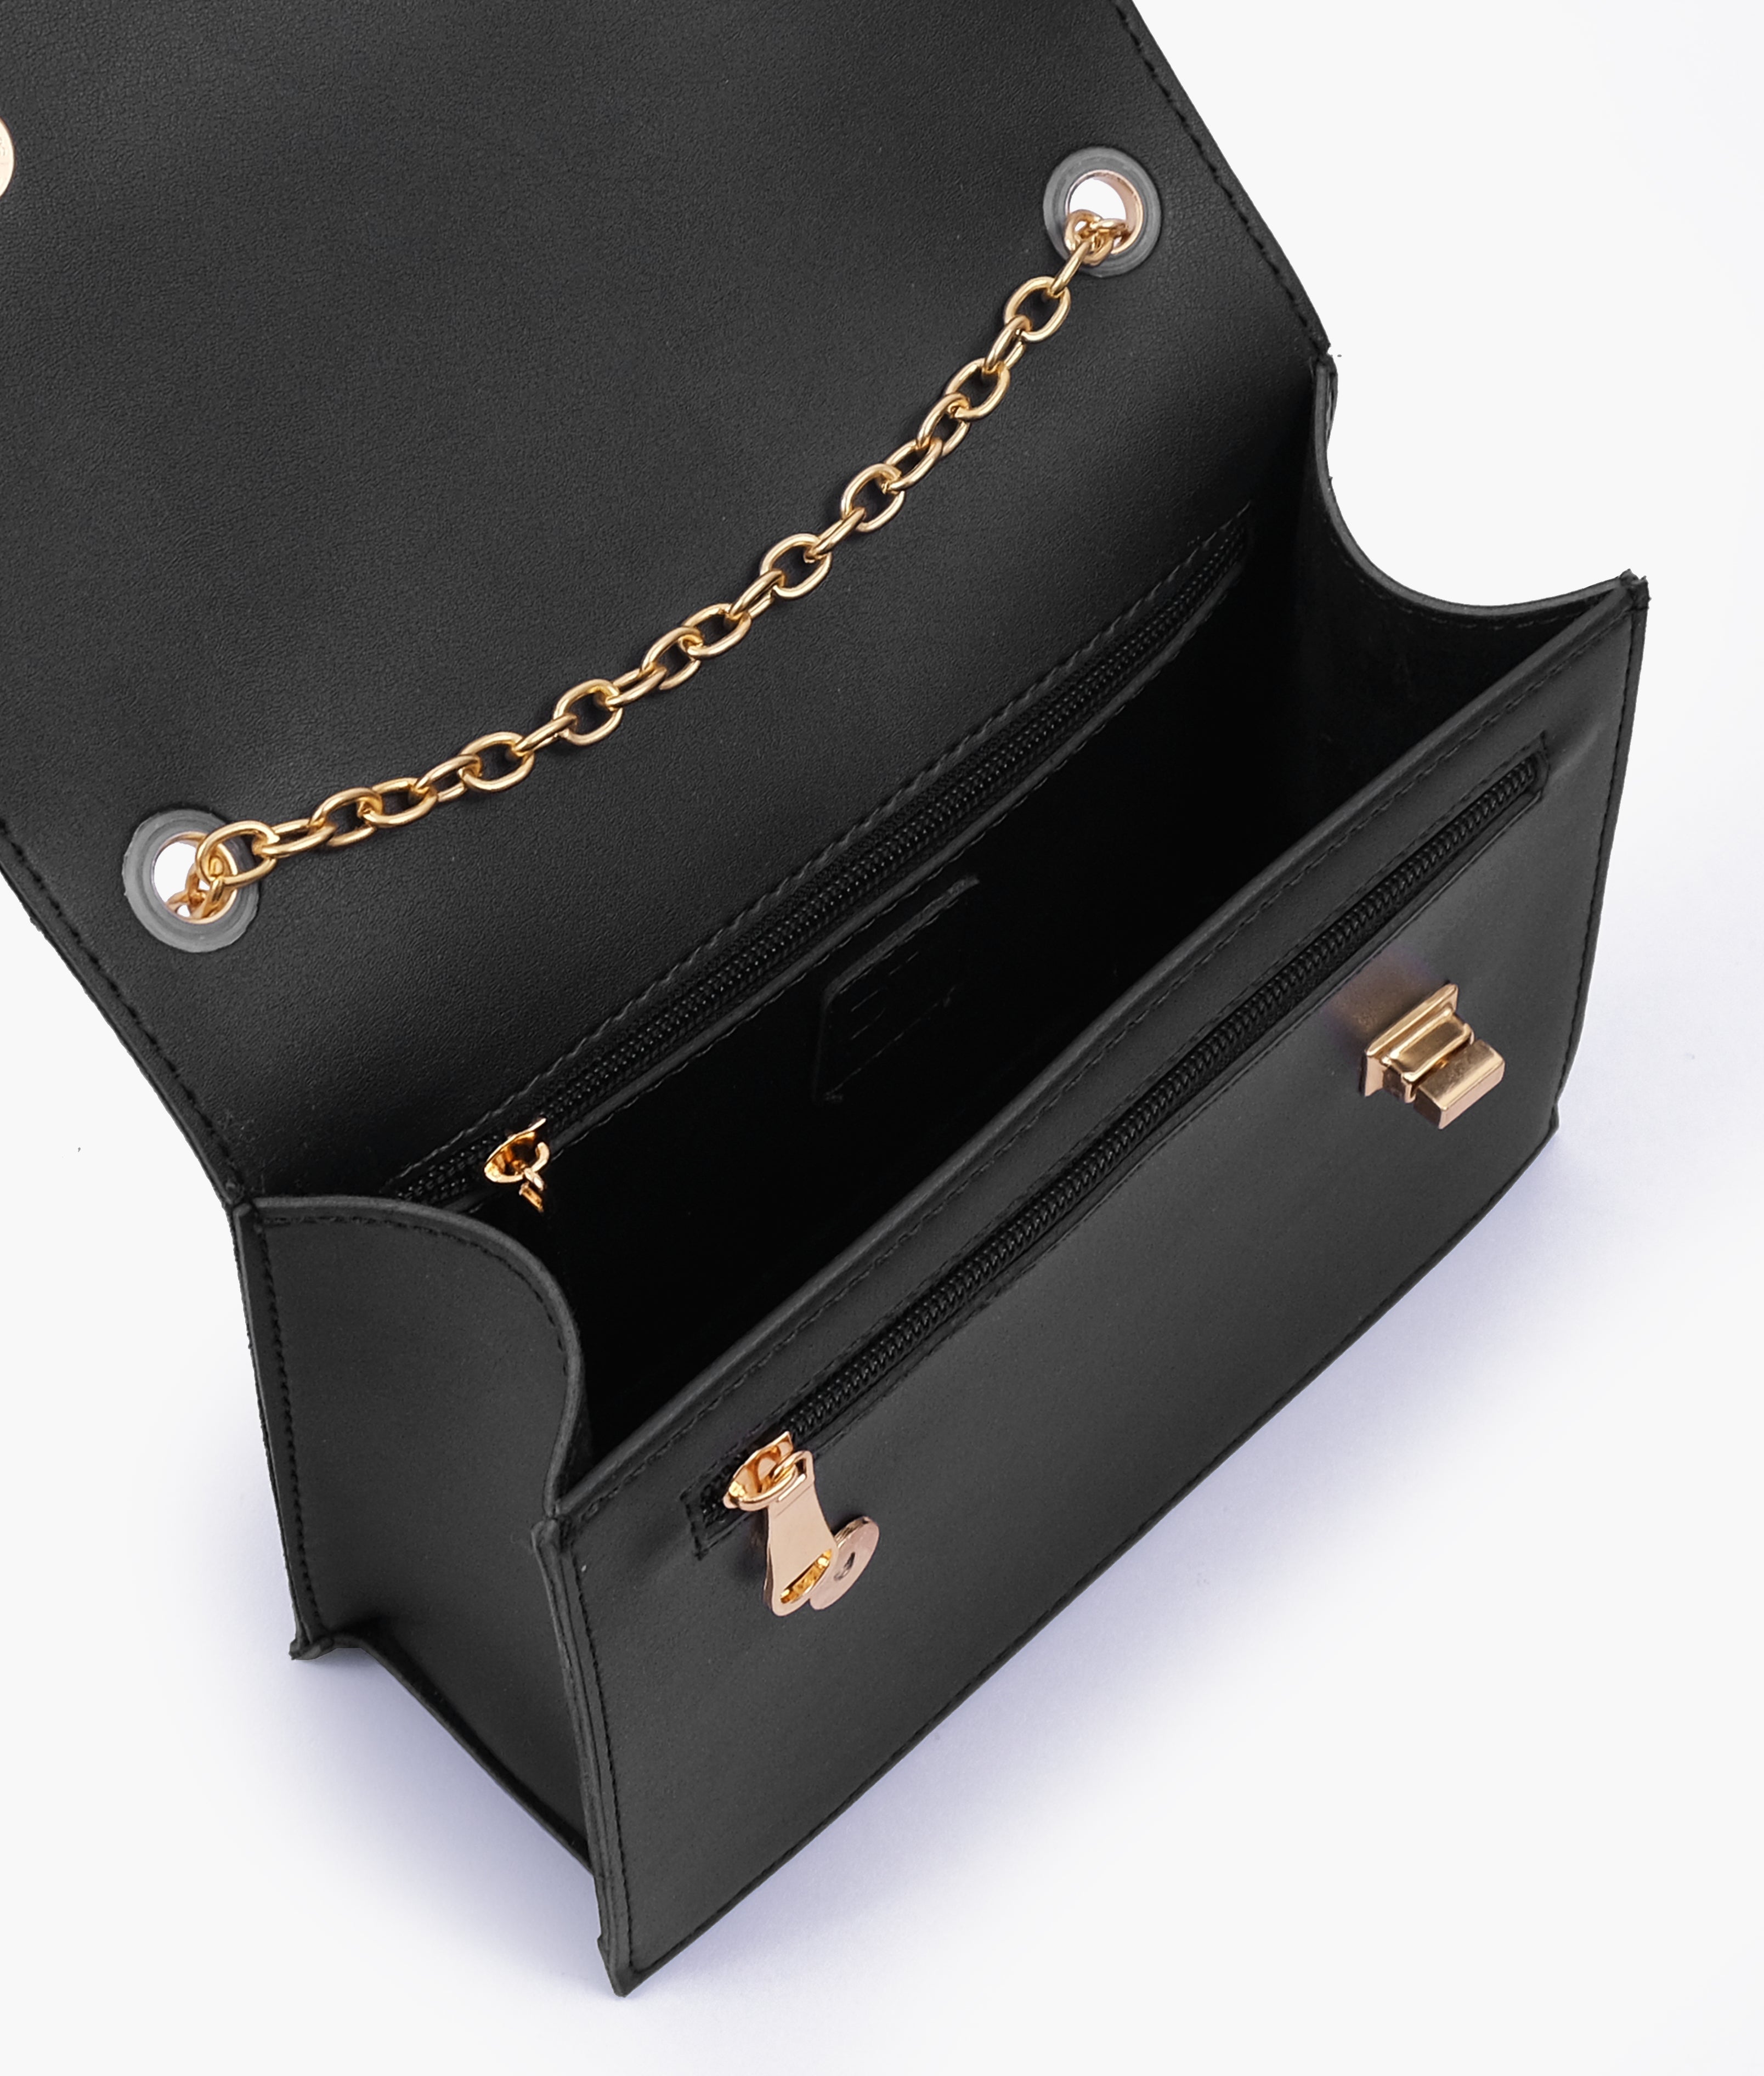 Black chain shoulder bag with twist lock